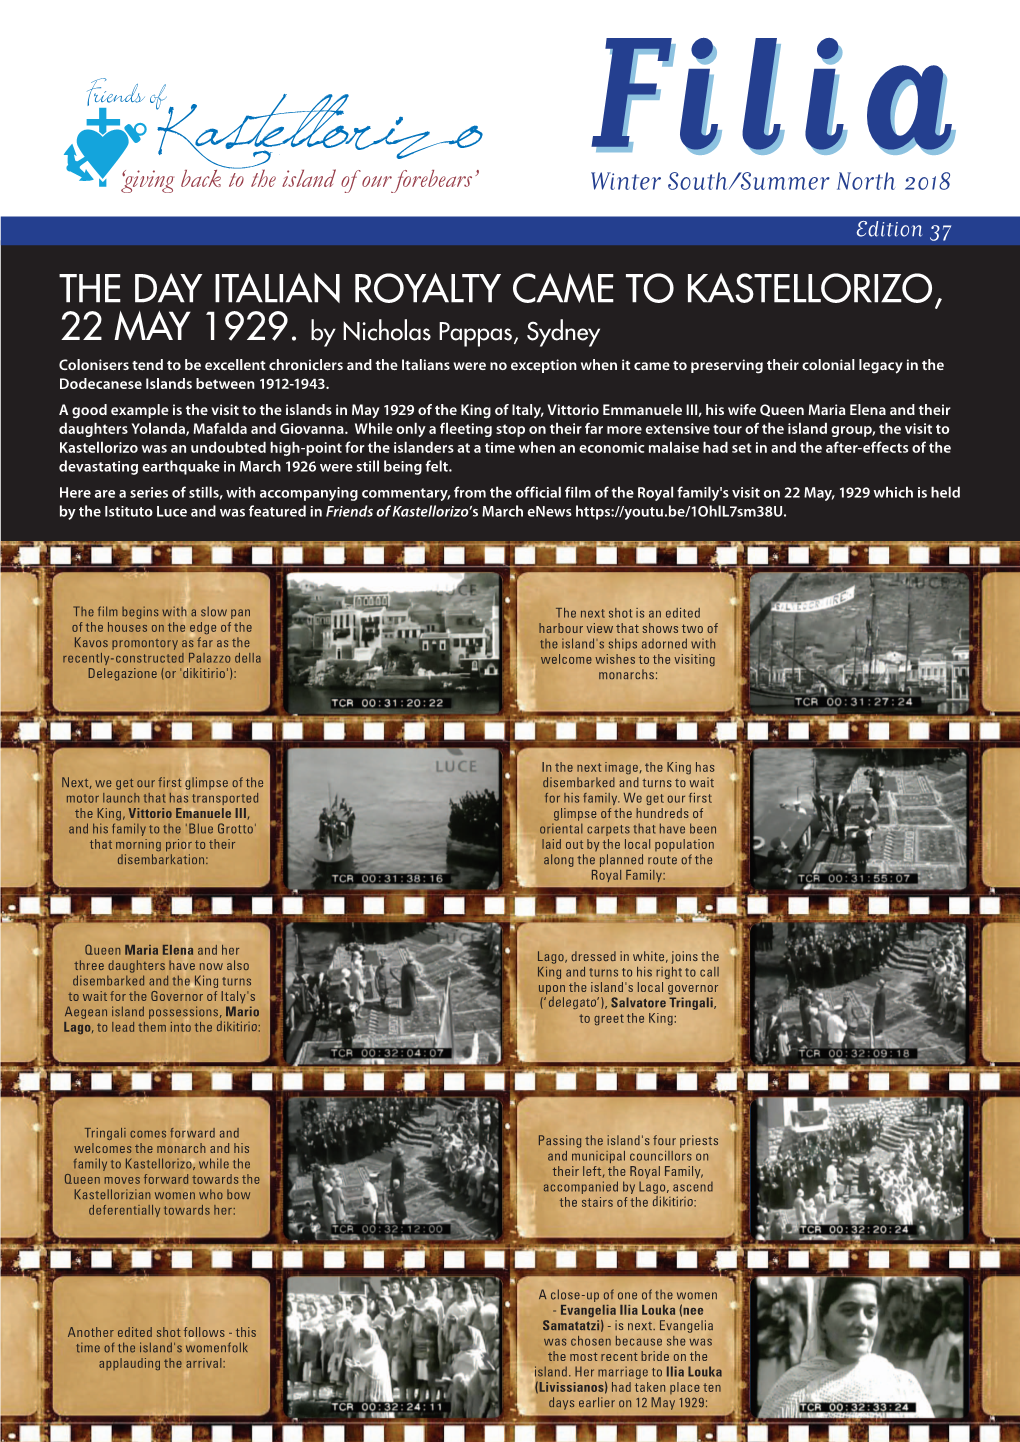 The Day Italian Royalty Came to Kastellorizo, 22 May 1929